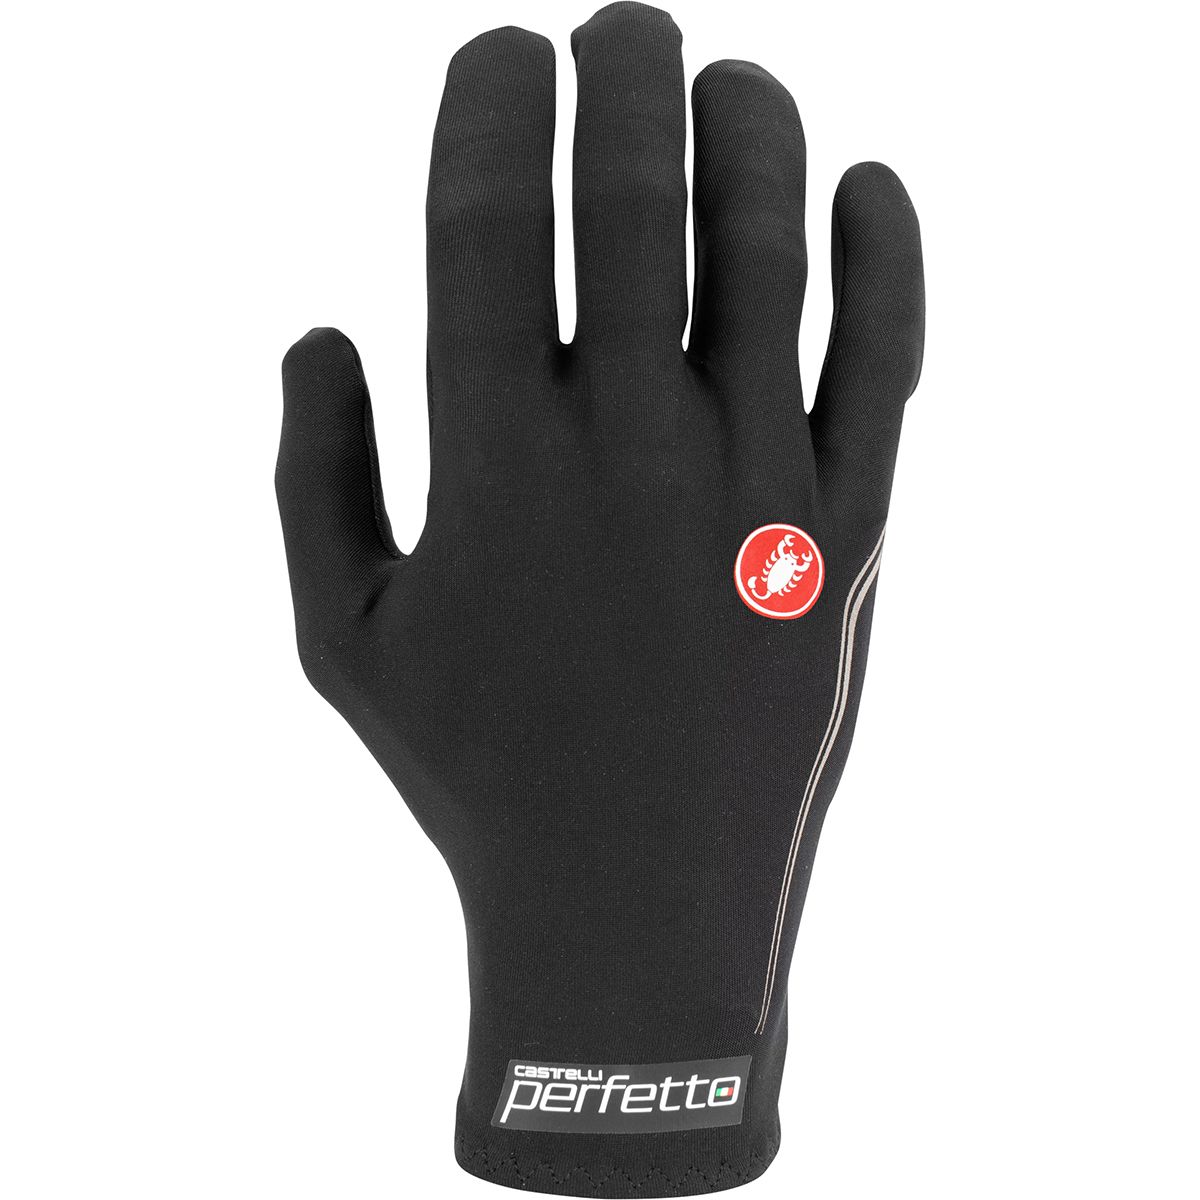 Castelli Mens Winter Lightness 2 Cycling Gloves Lightweight Padded Bike Gloves for Cold Weather